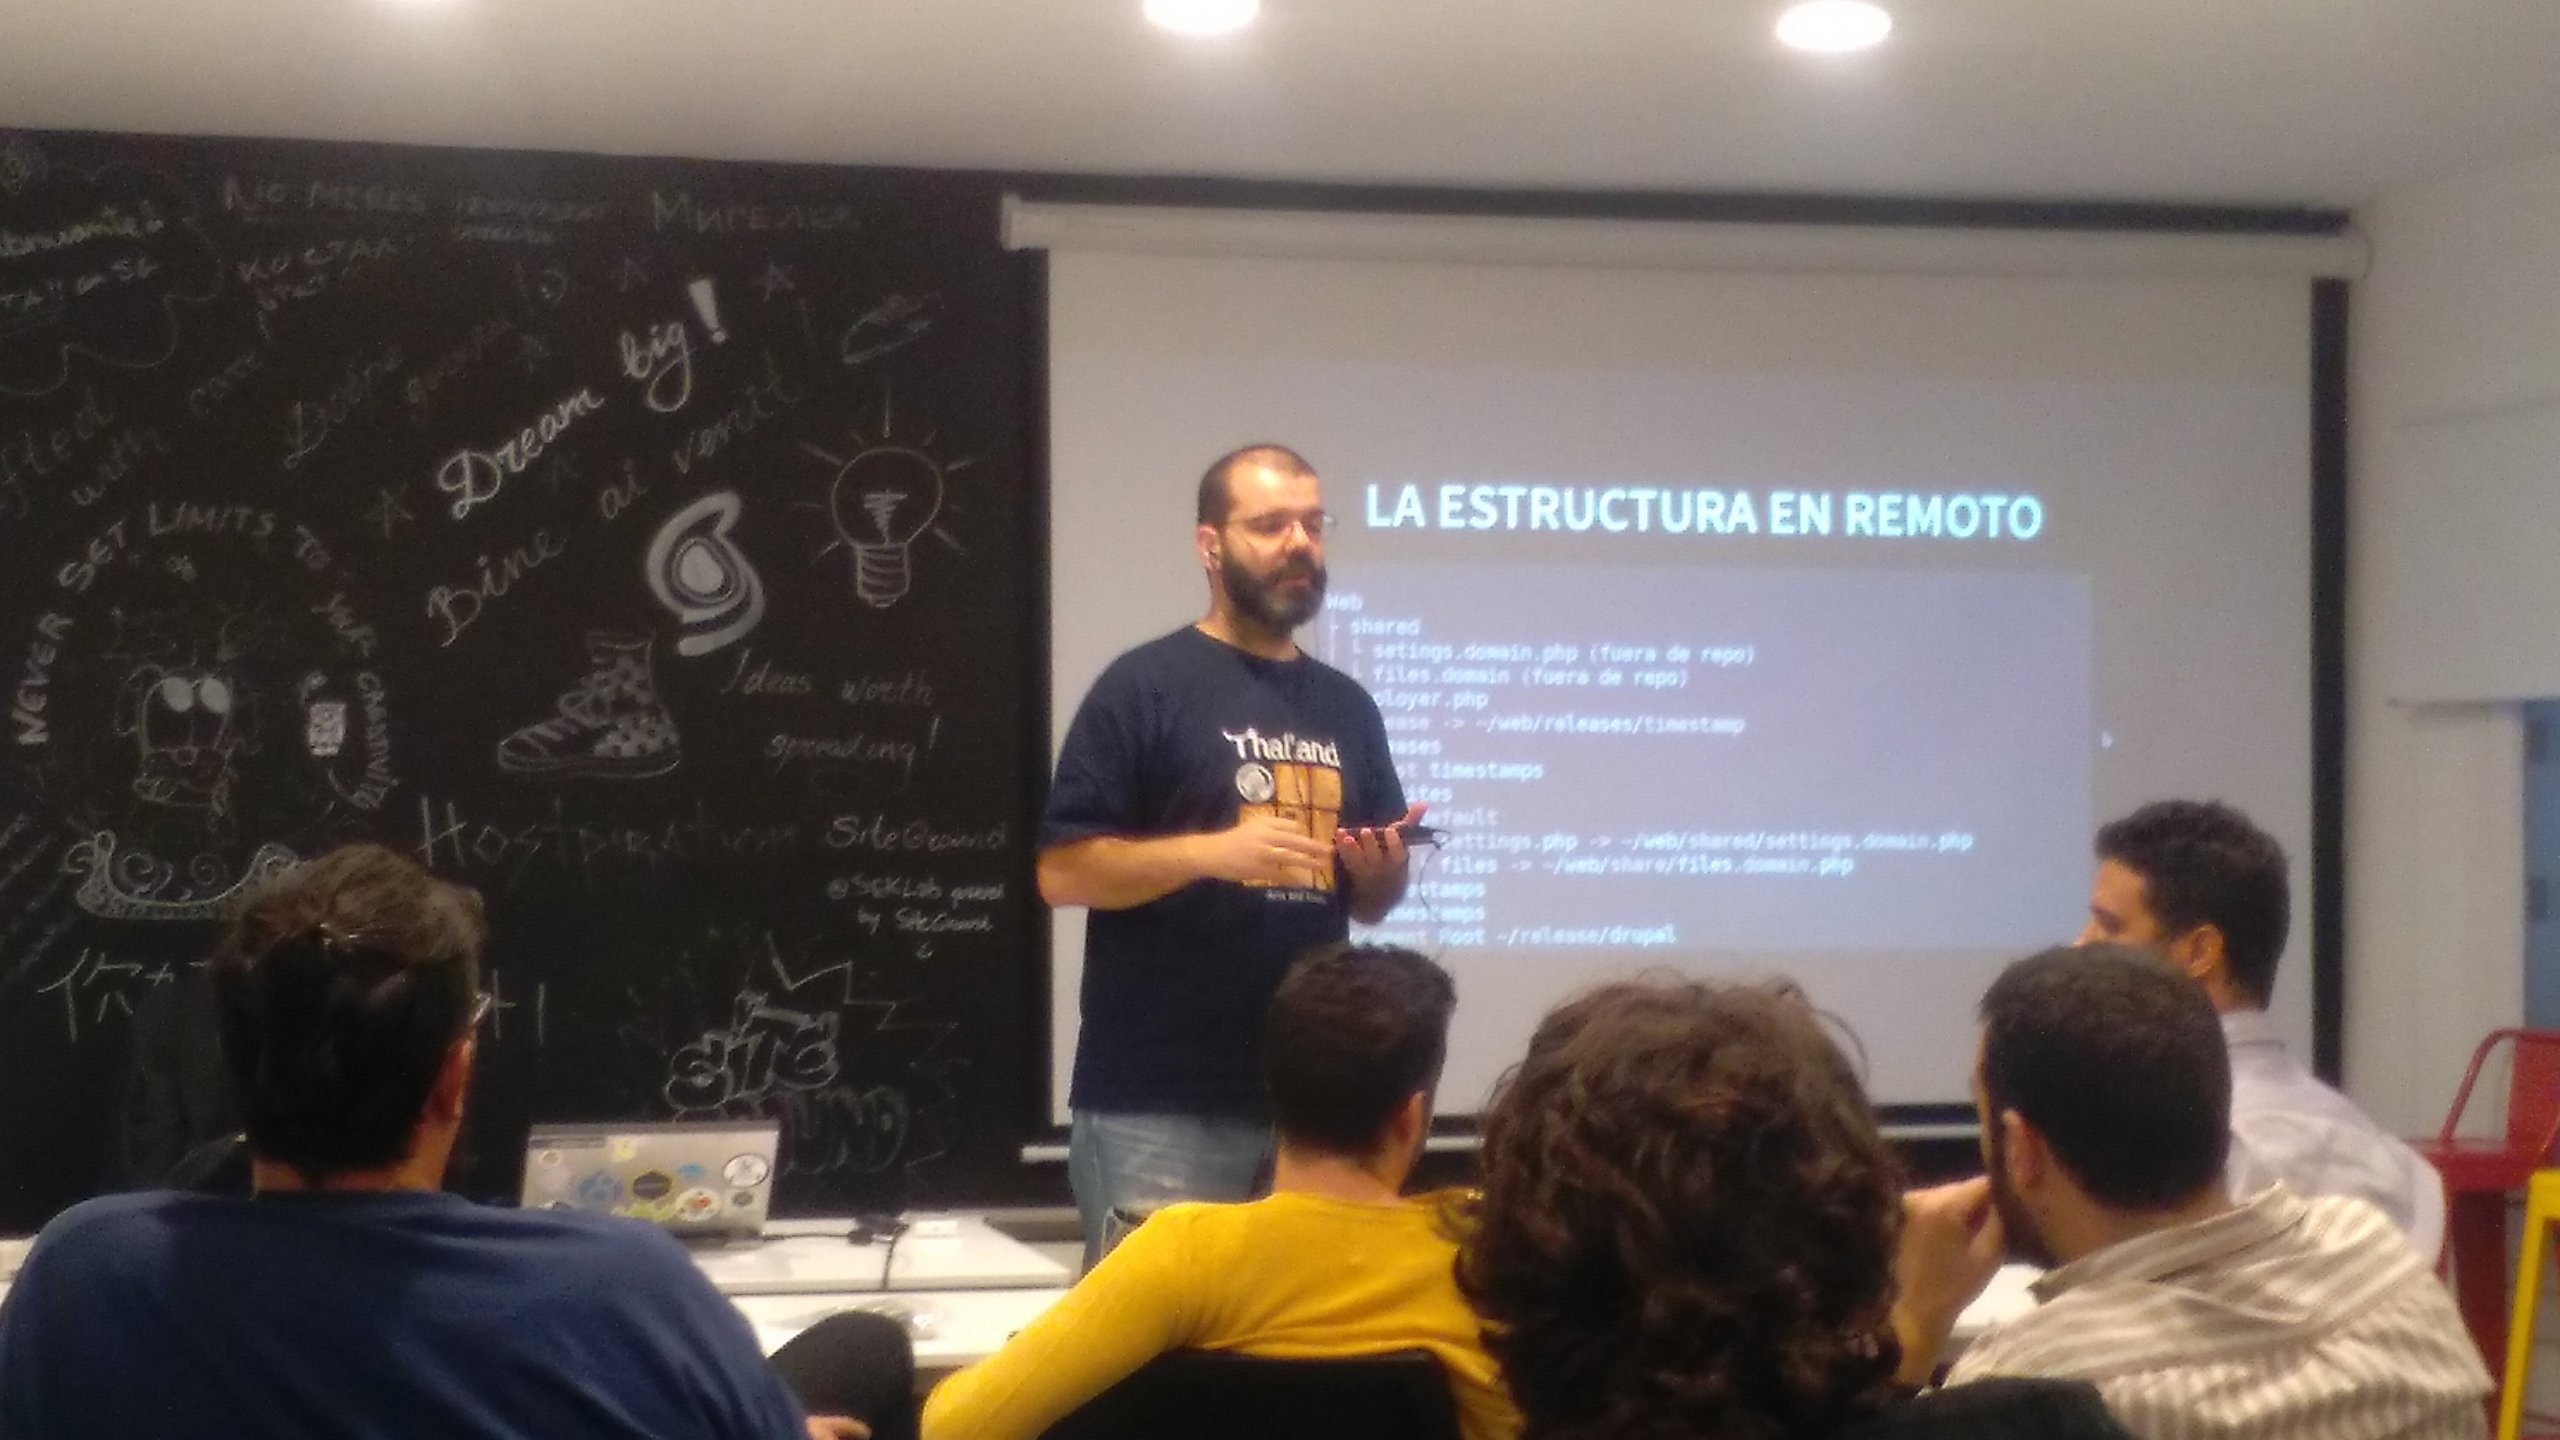 Oskar Calvo giving a lecture La Estructura En Remoto